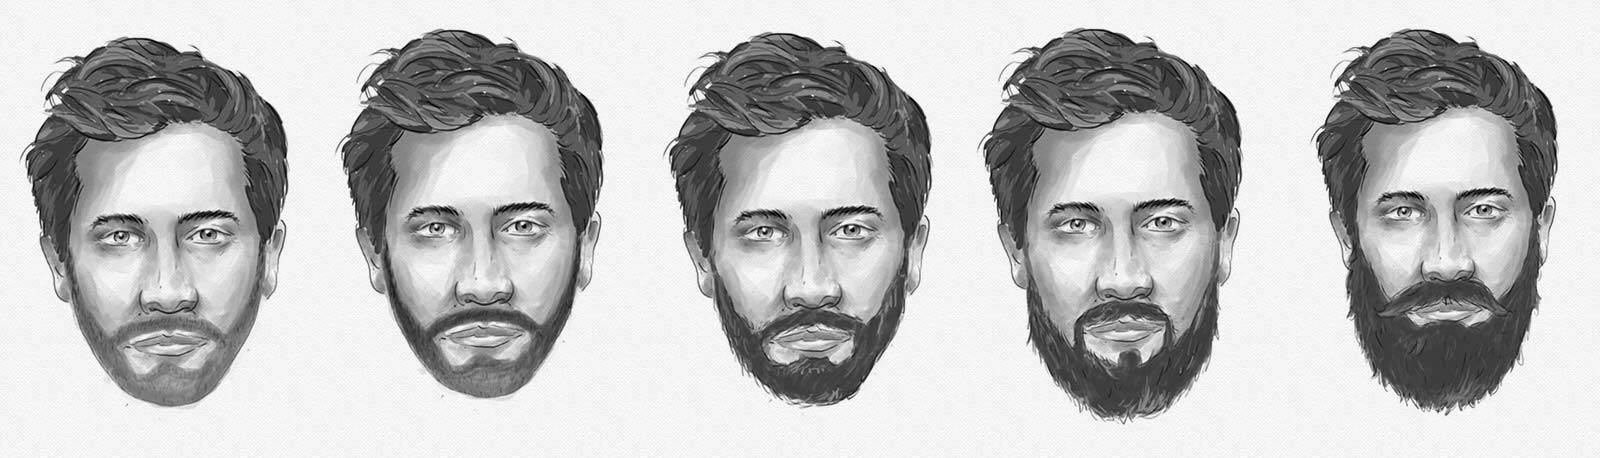 Men With Beard Styles